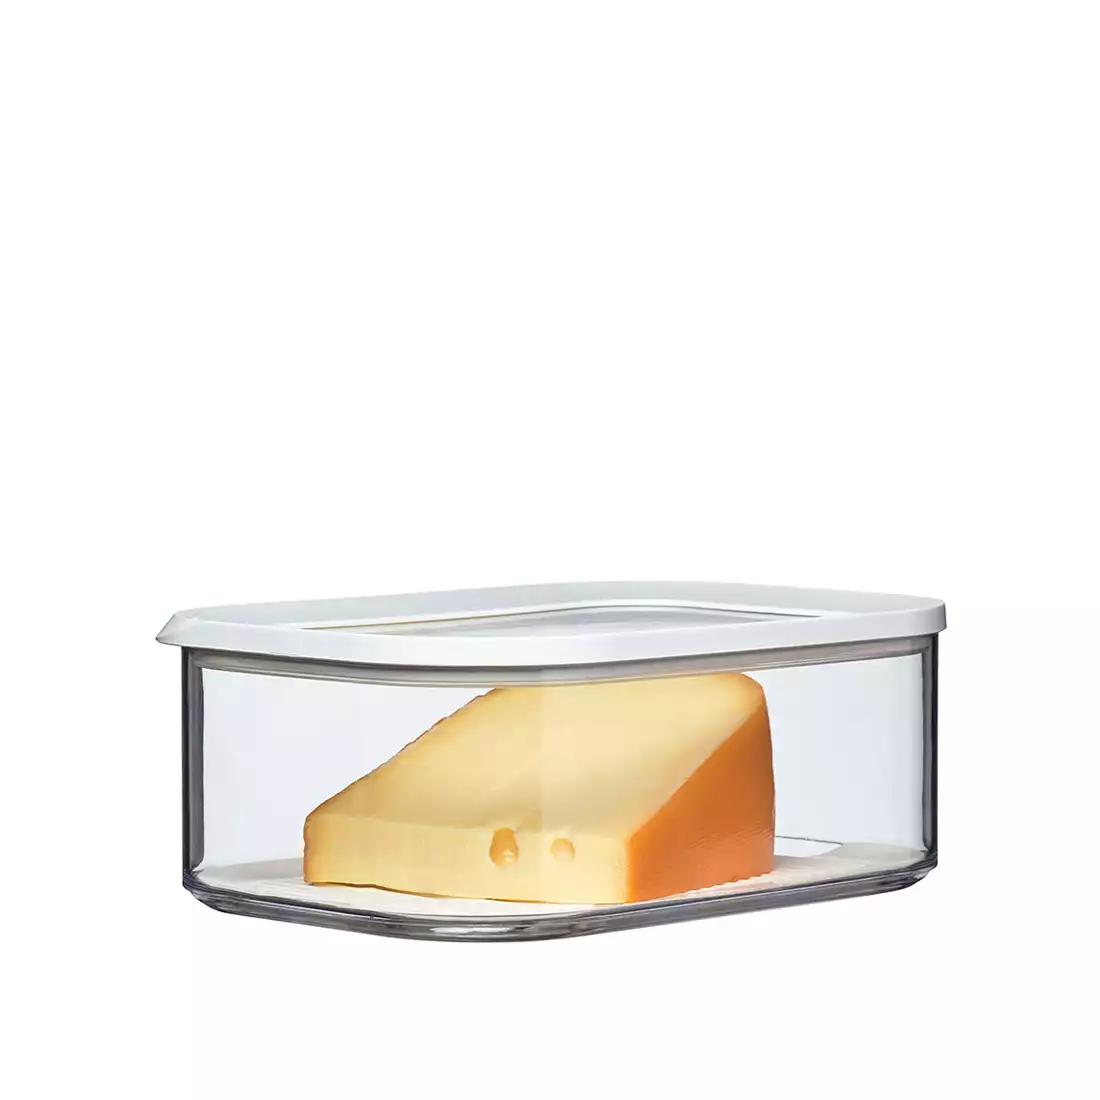 MEPAL MODULA cheese container 2000 ml, white